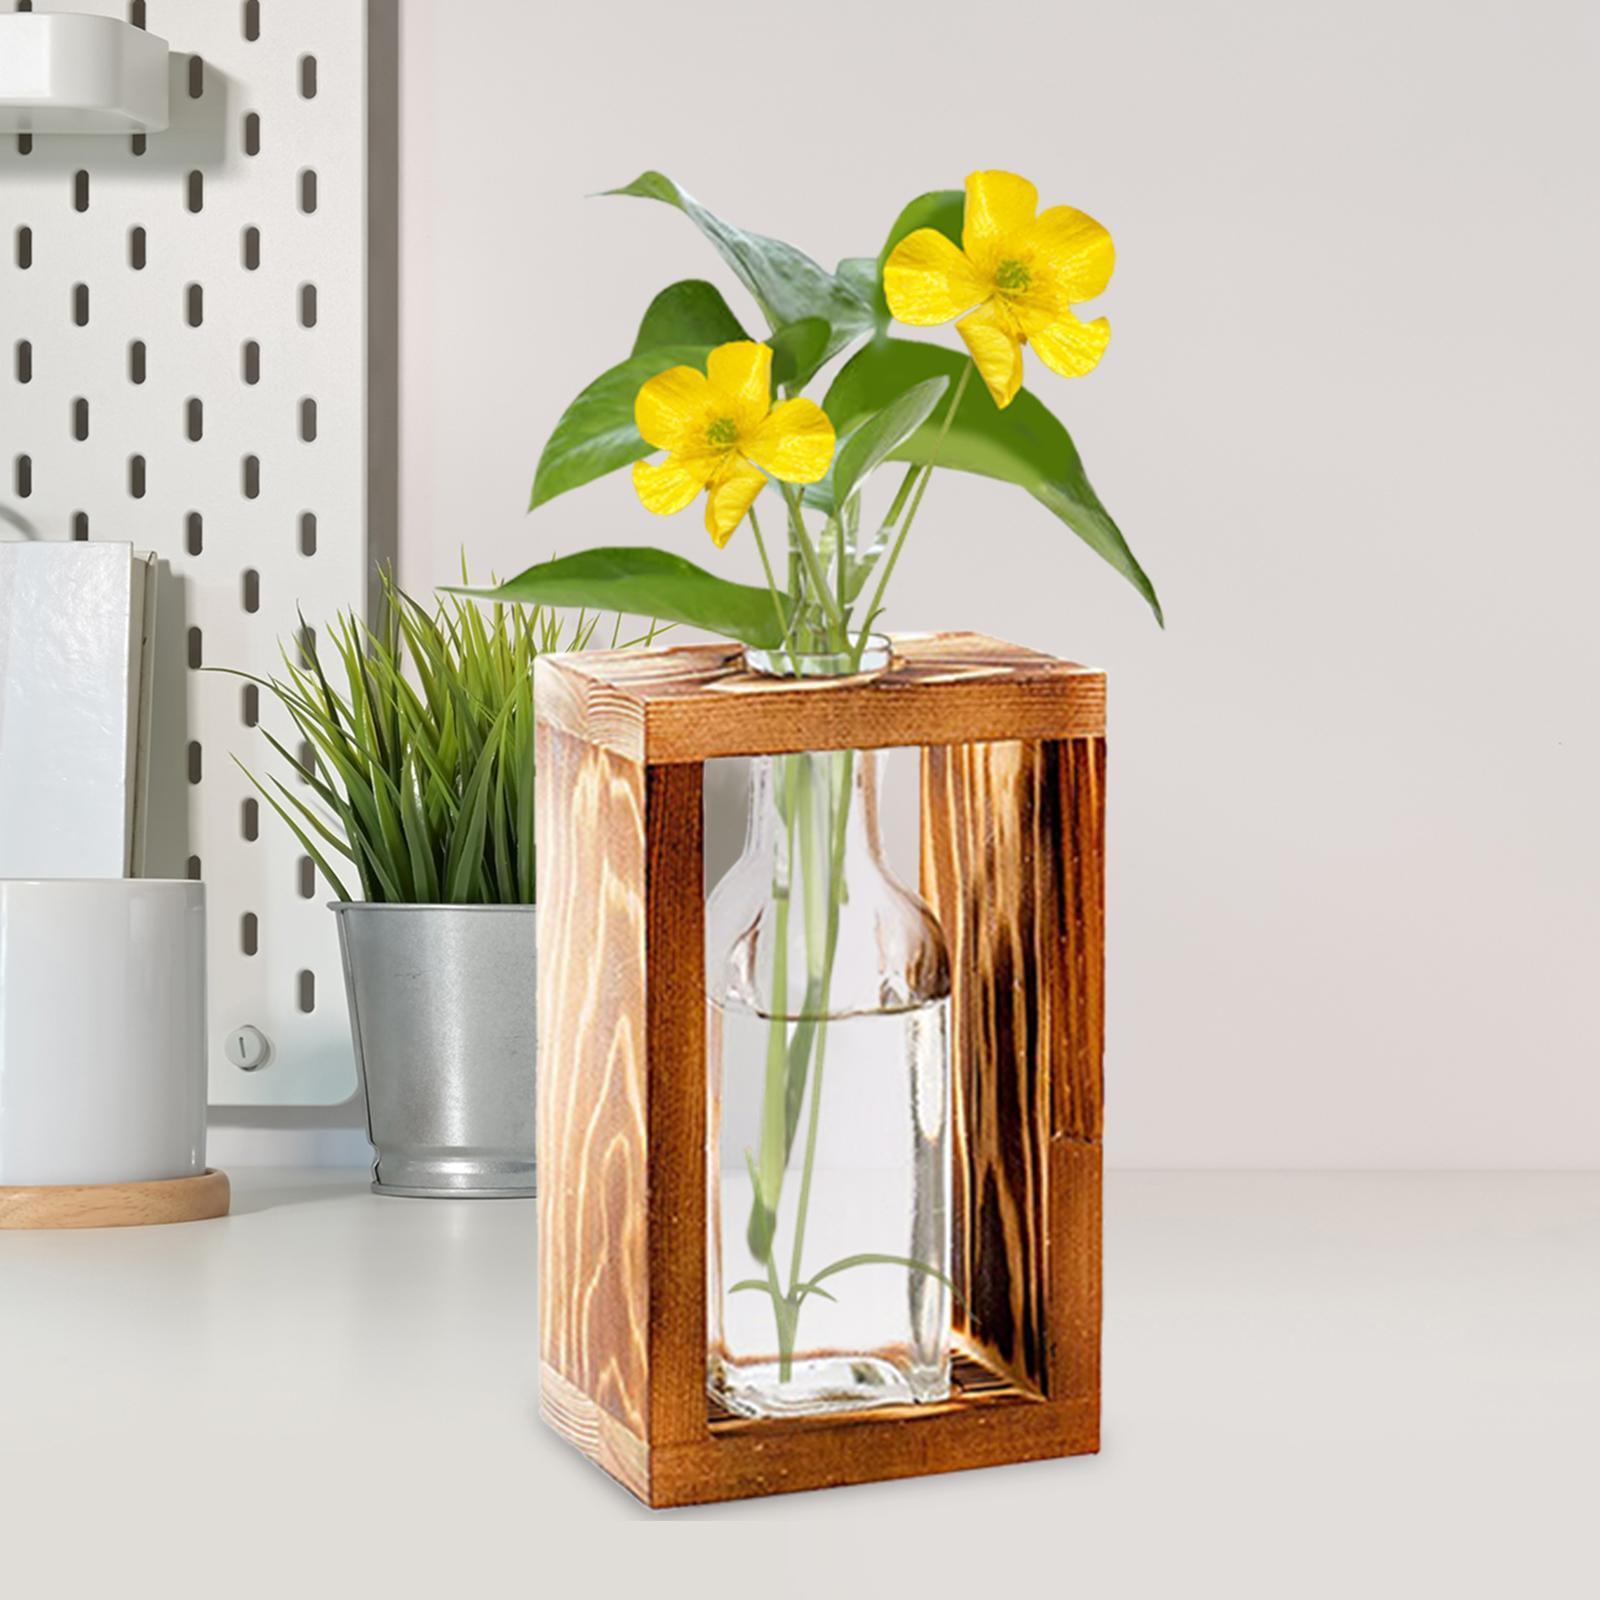 Plant Vase home Pot Garden Decor Desktop Container Holder